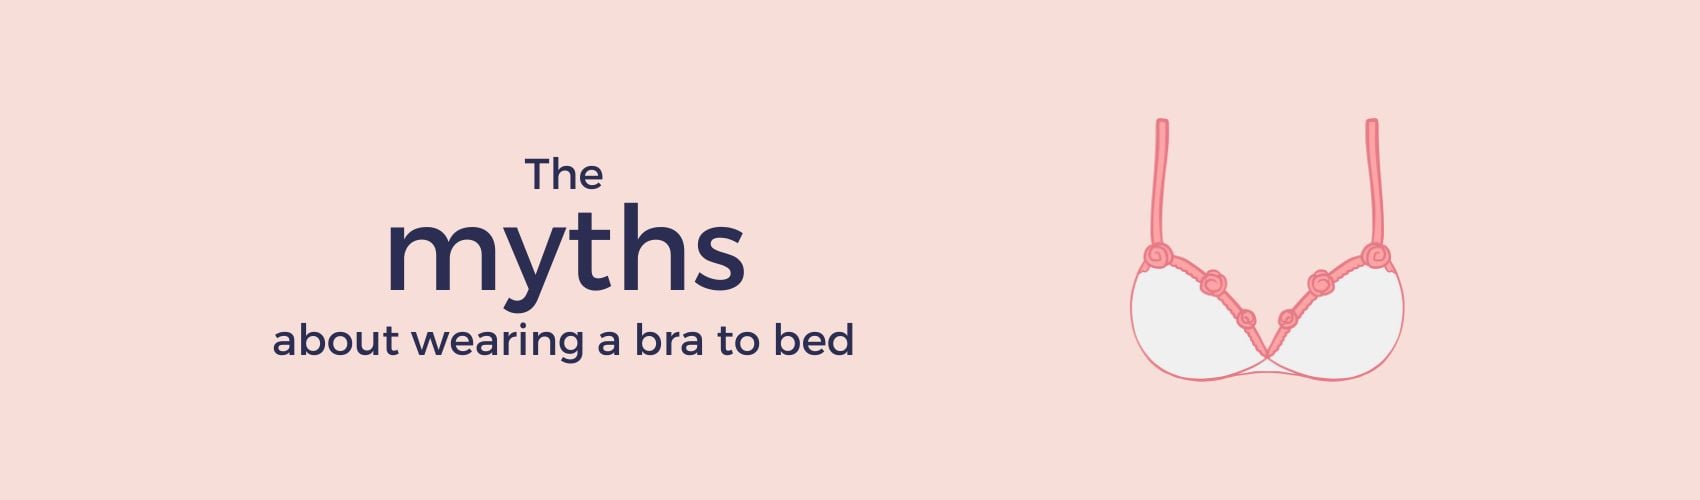 Should You Wear a Bra While Sleeping?